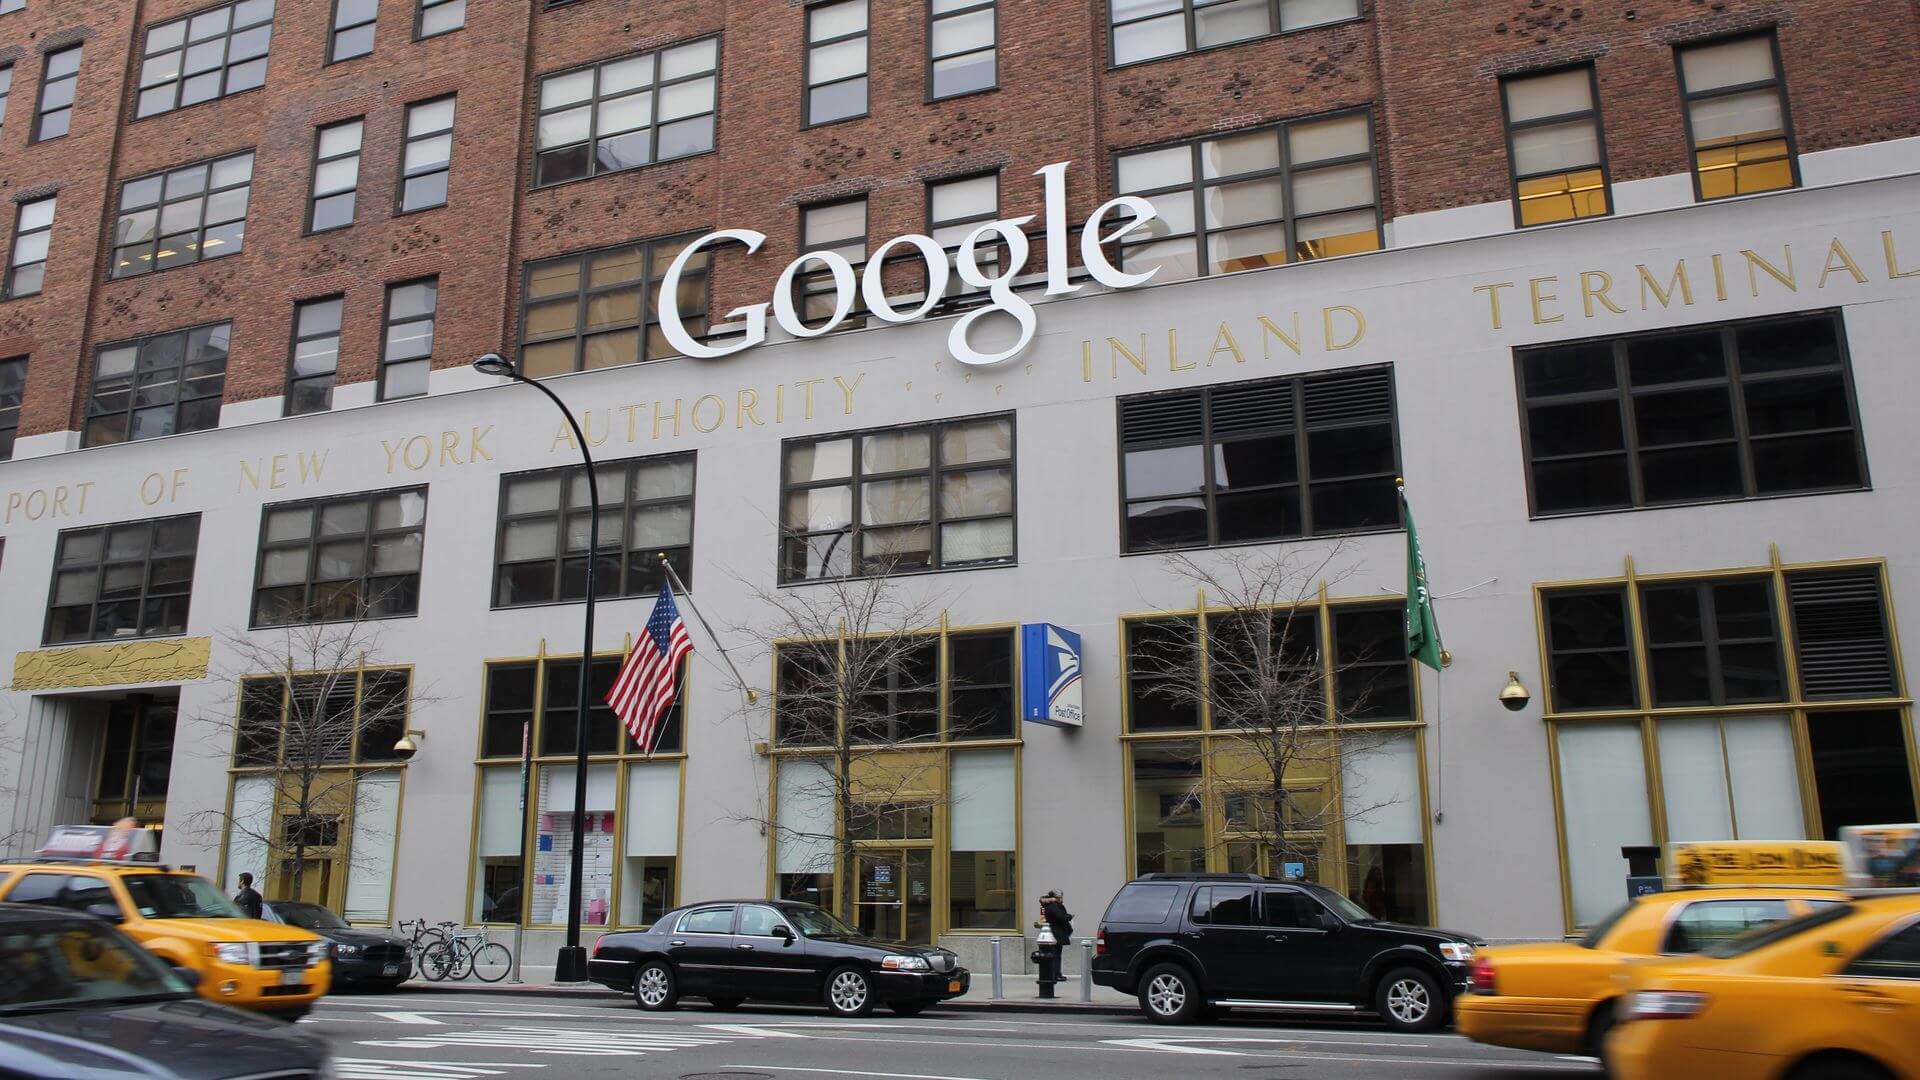 Google to invest $1 billion in New York City campus